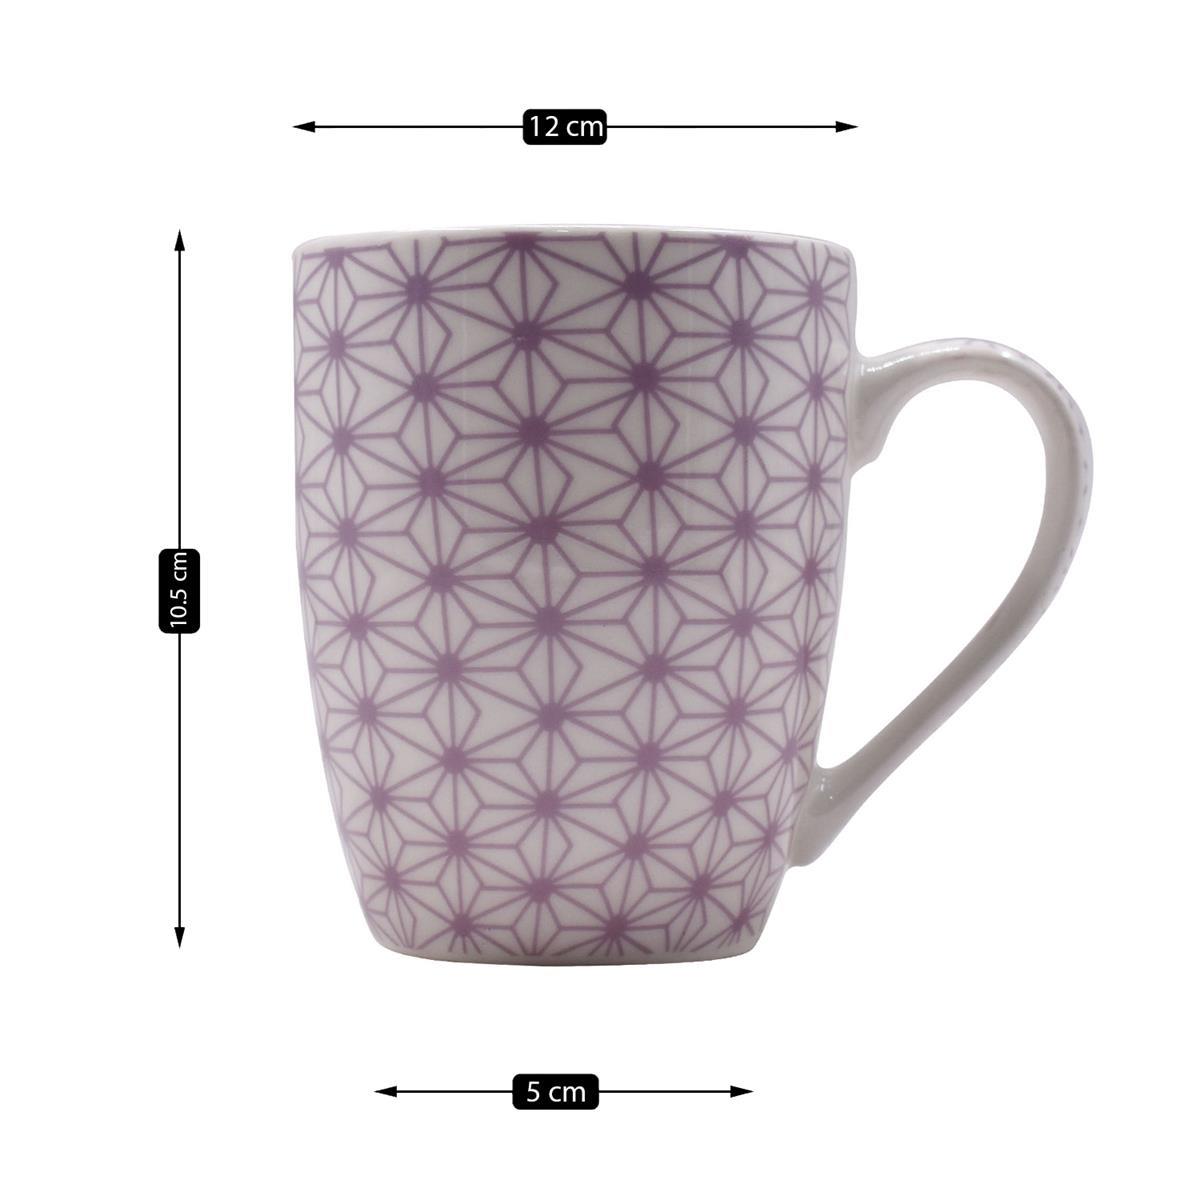 Printed Ceramic Coffee or Tea Mug with handle - 325ml (BPM3533-B)